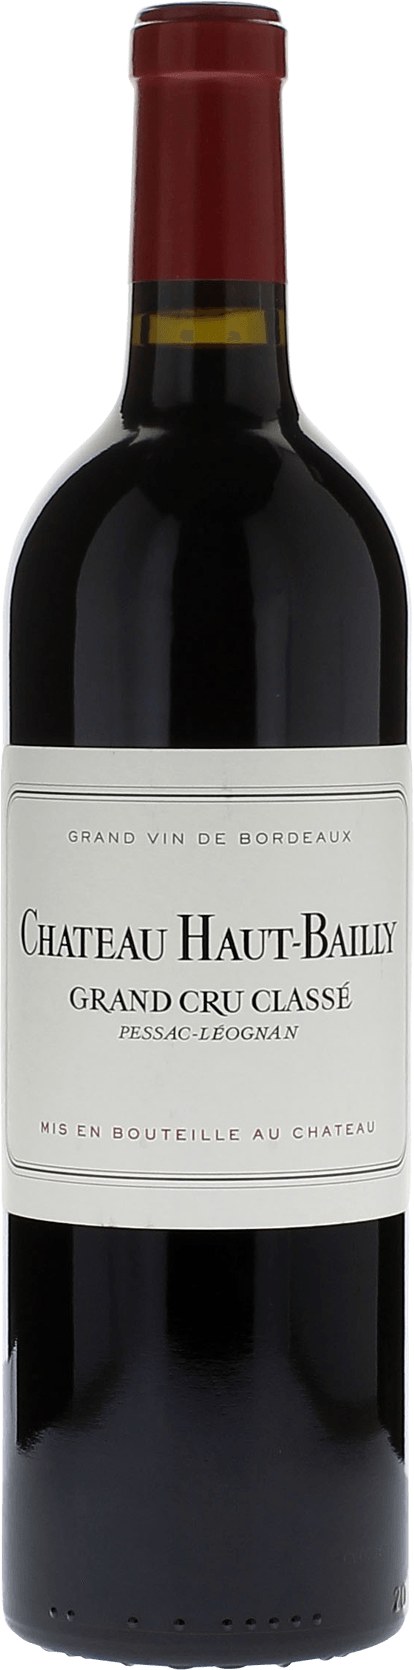 Haut bailly 1995 cru class Pessac-Lognan, Bordeaux rouge